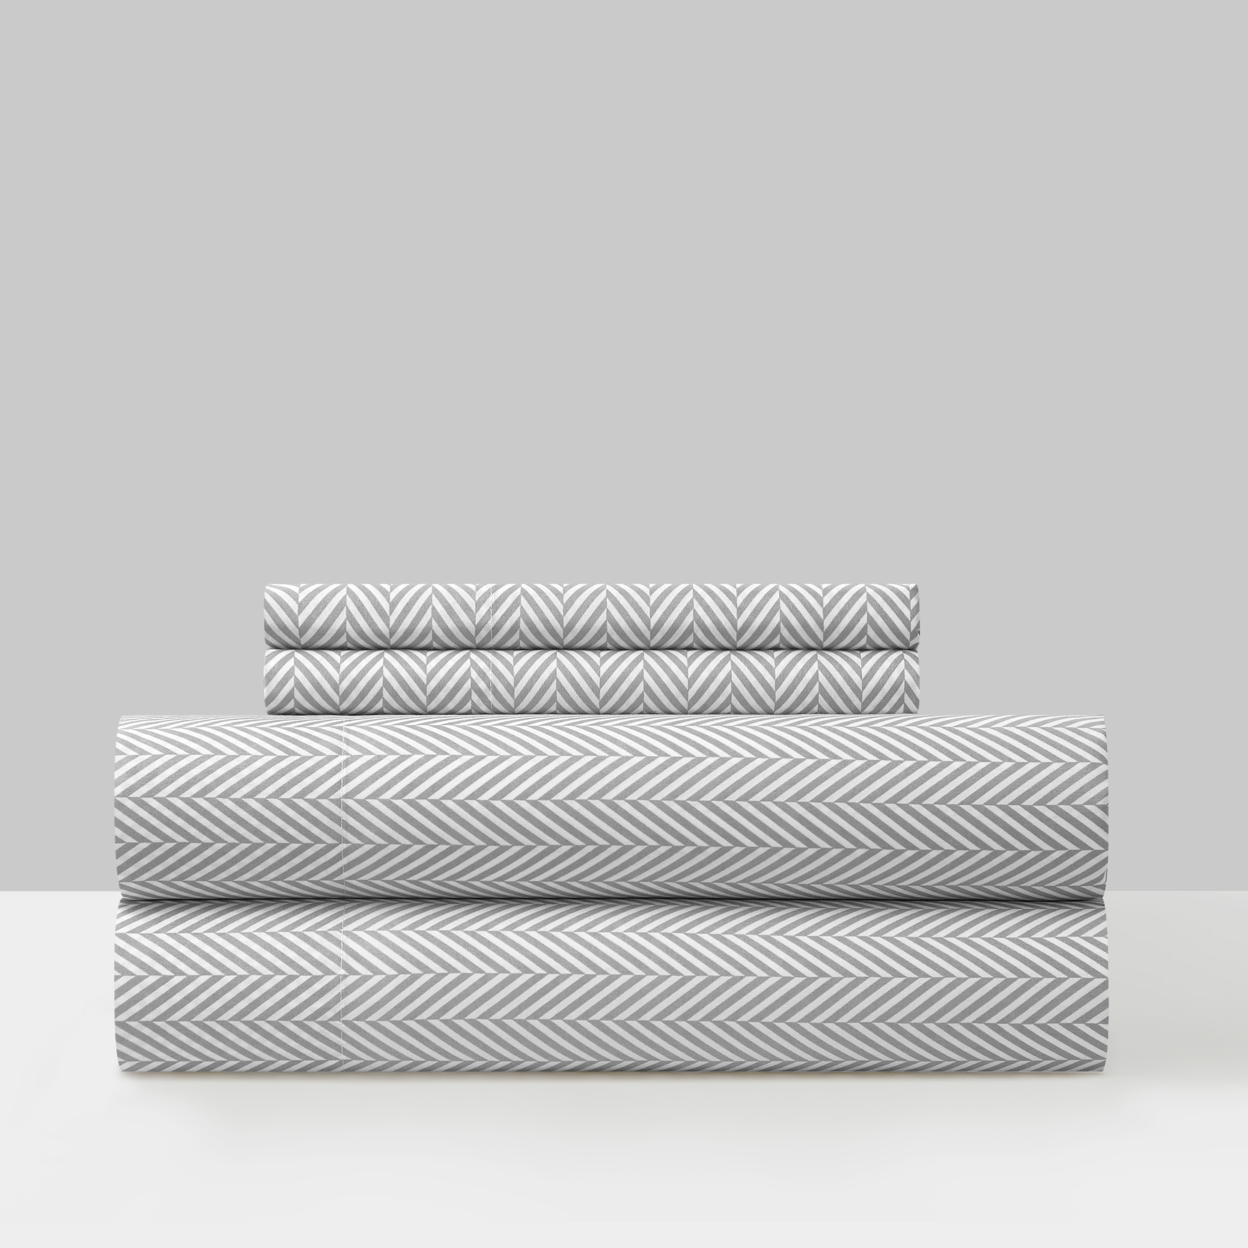 Enise 3 Or 4 Piece Sheet Set Super Soft Graphic Herringbone Print Design - Grey, King